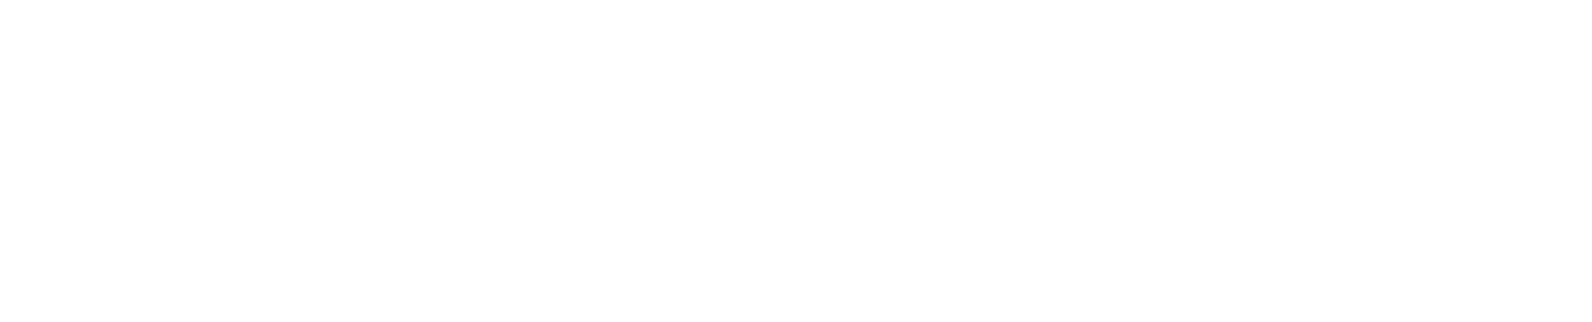 Adecoagro Logo groß für dunkle Hintergründe (transparentes PNG)